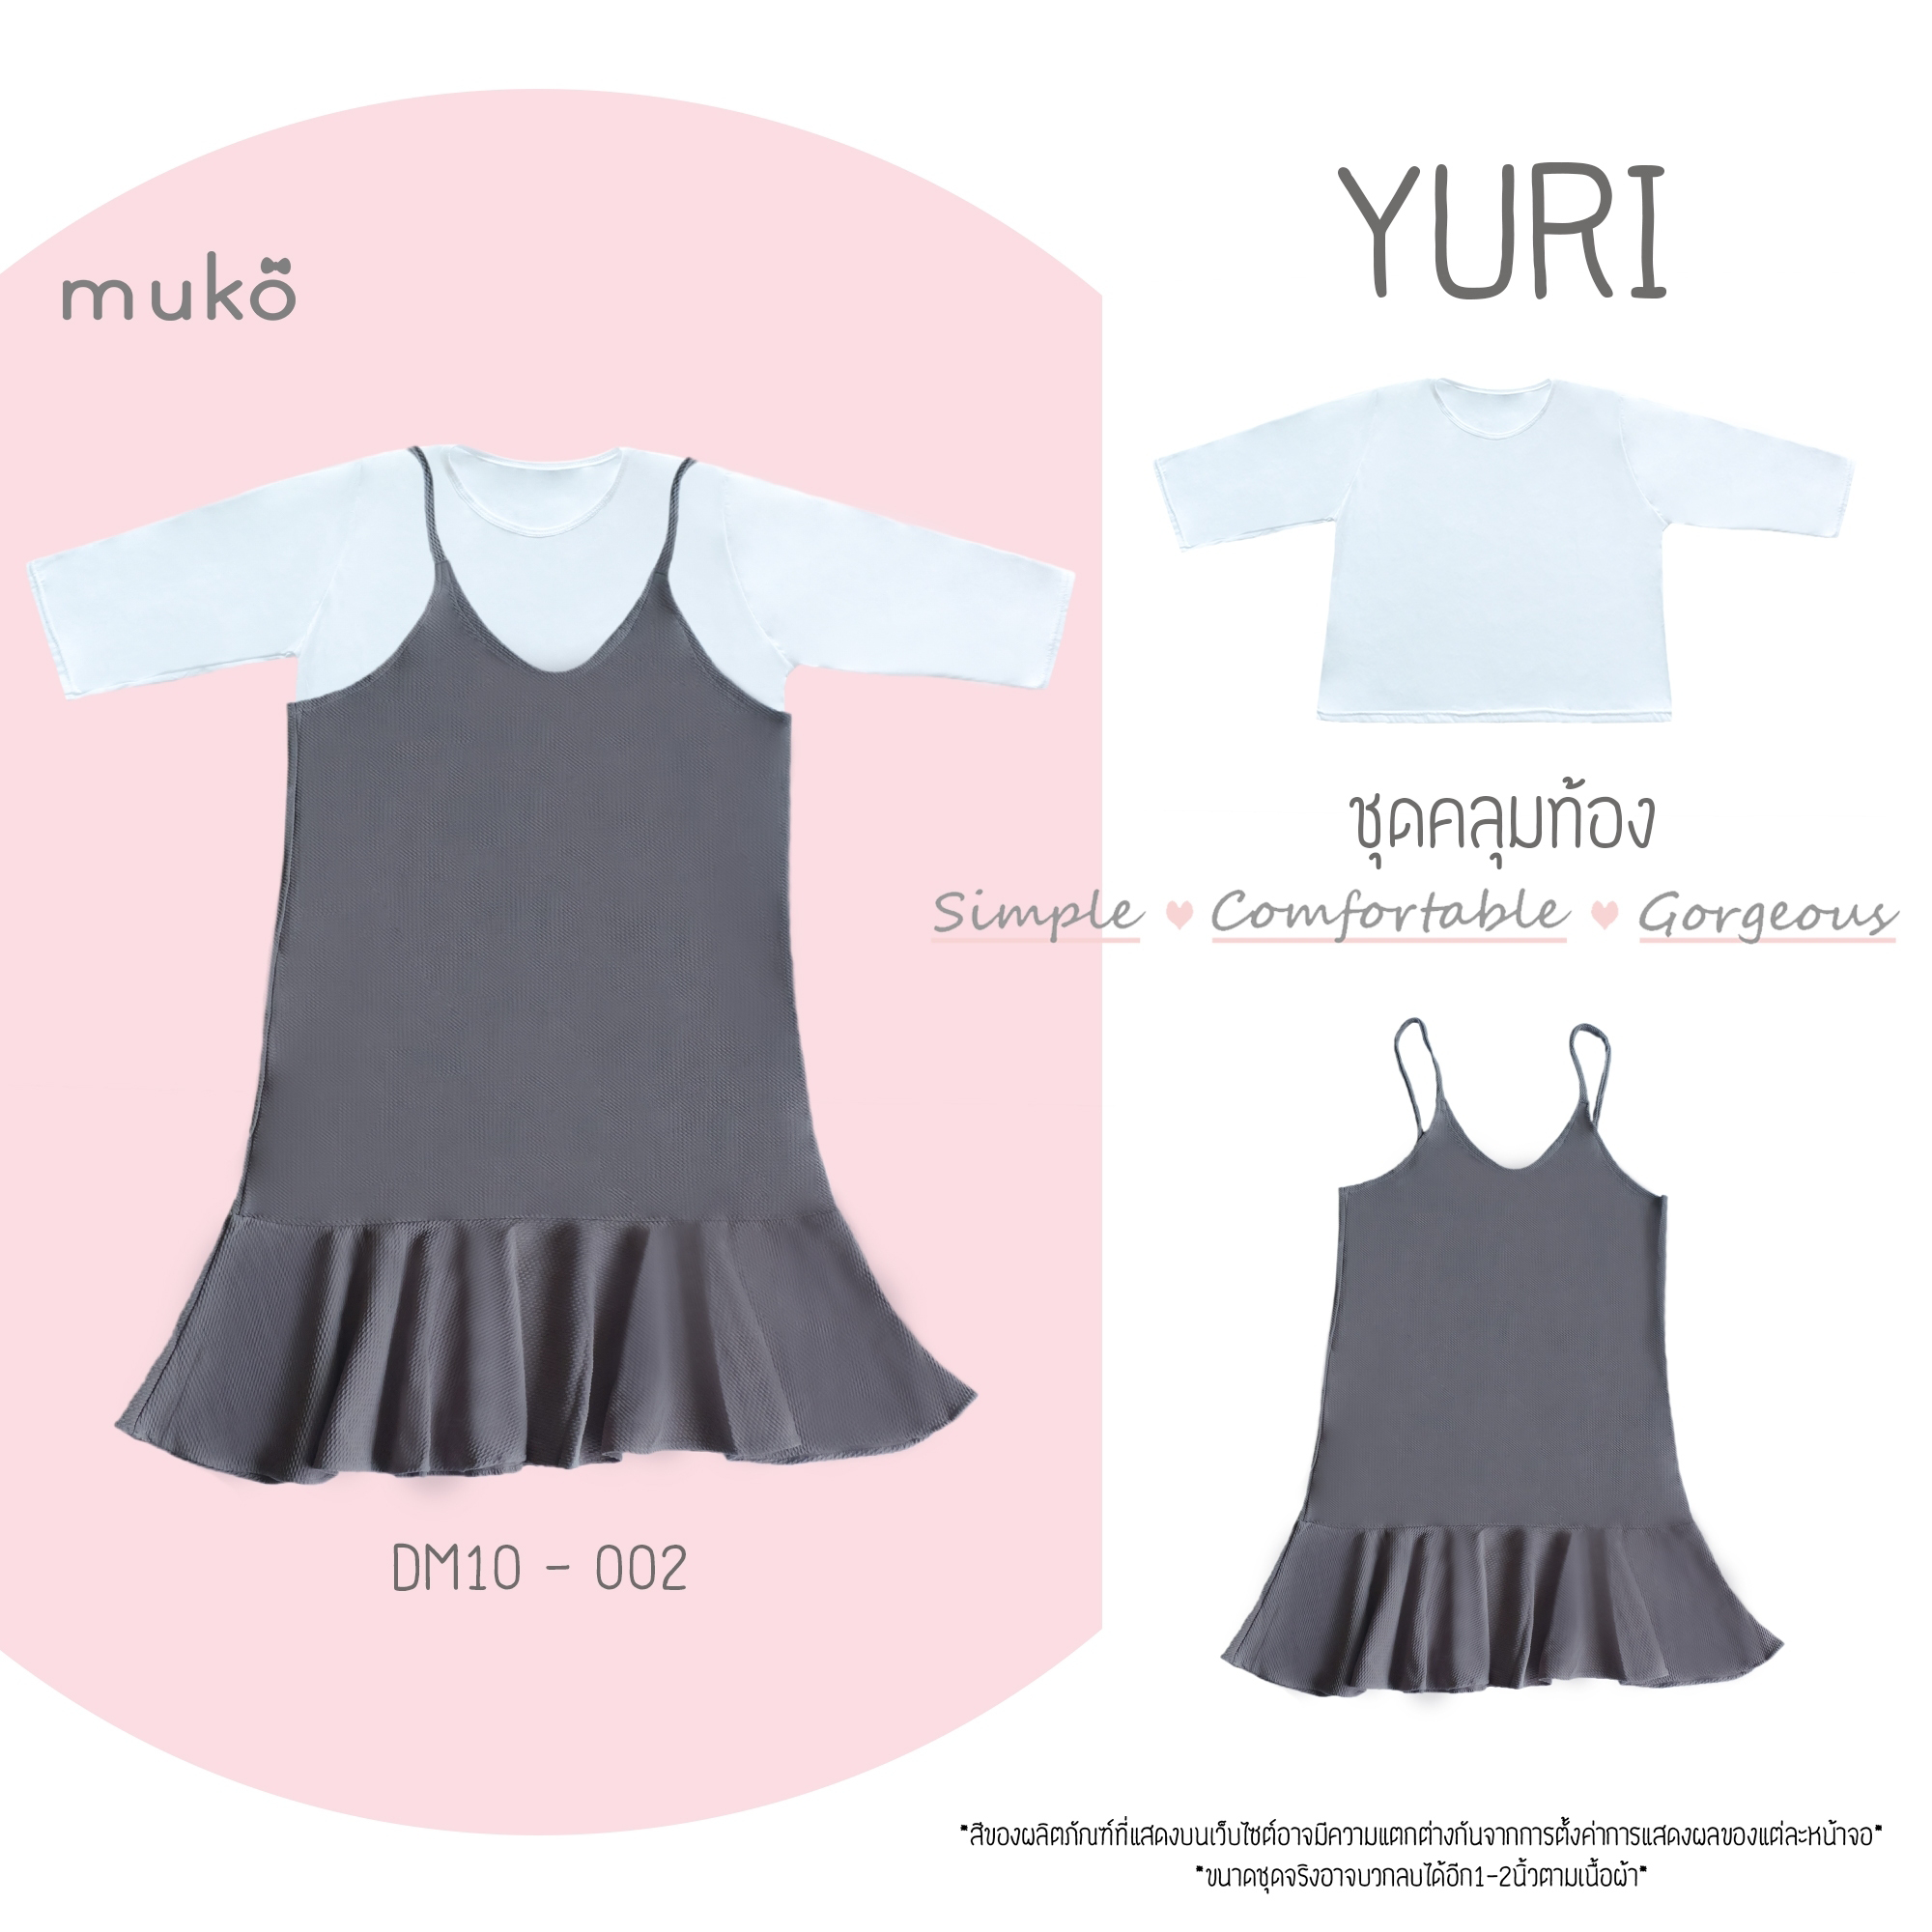 Muko Yuri ชุดเซ็ต (เสื้อและกระโปรงเอี๊ยม) คลุมท้องหรือจะใส่แฟชั่นสวยๆก็ได้นะคะ DM10-002 สีเทา